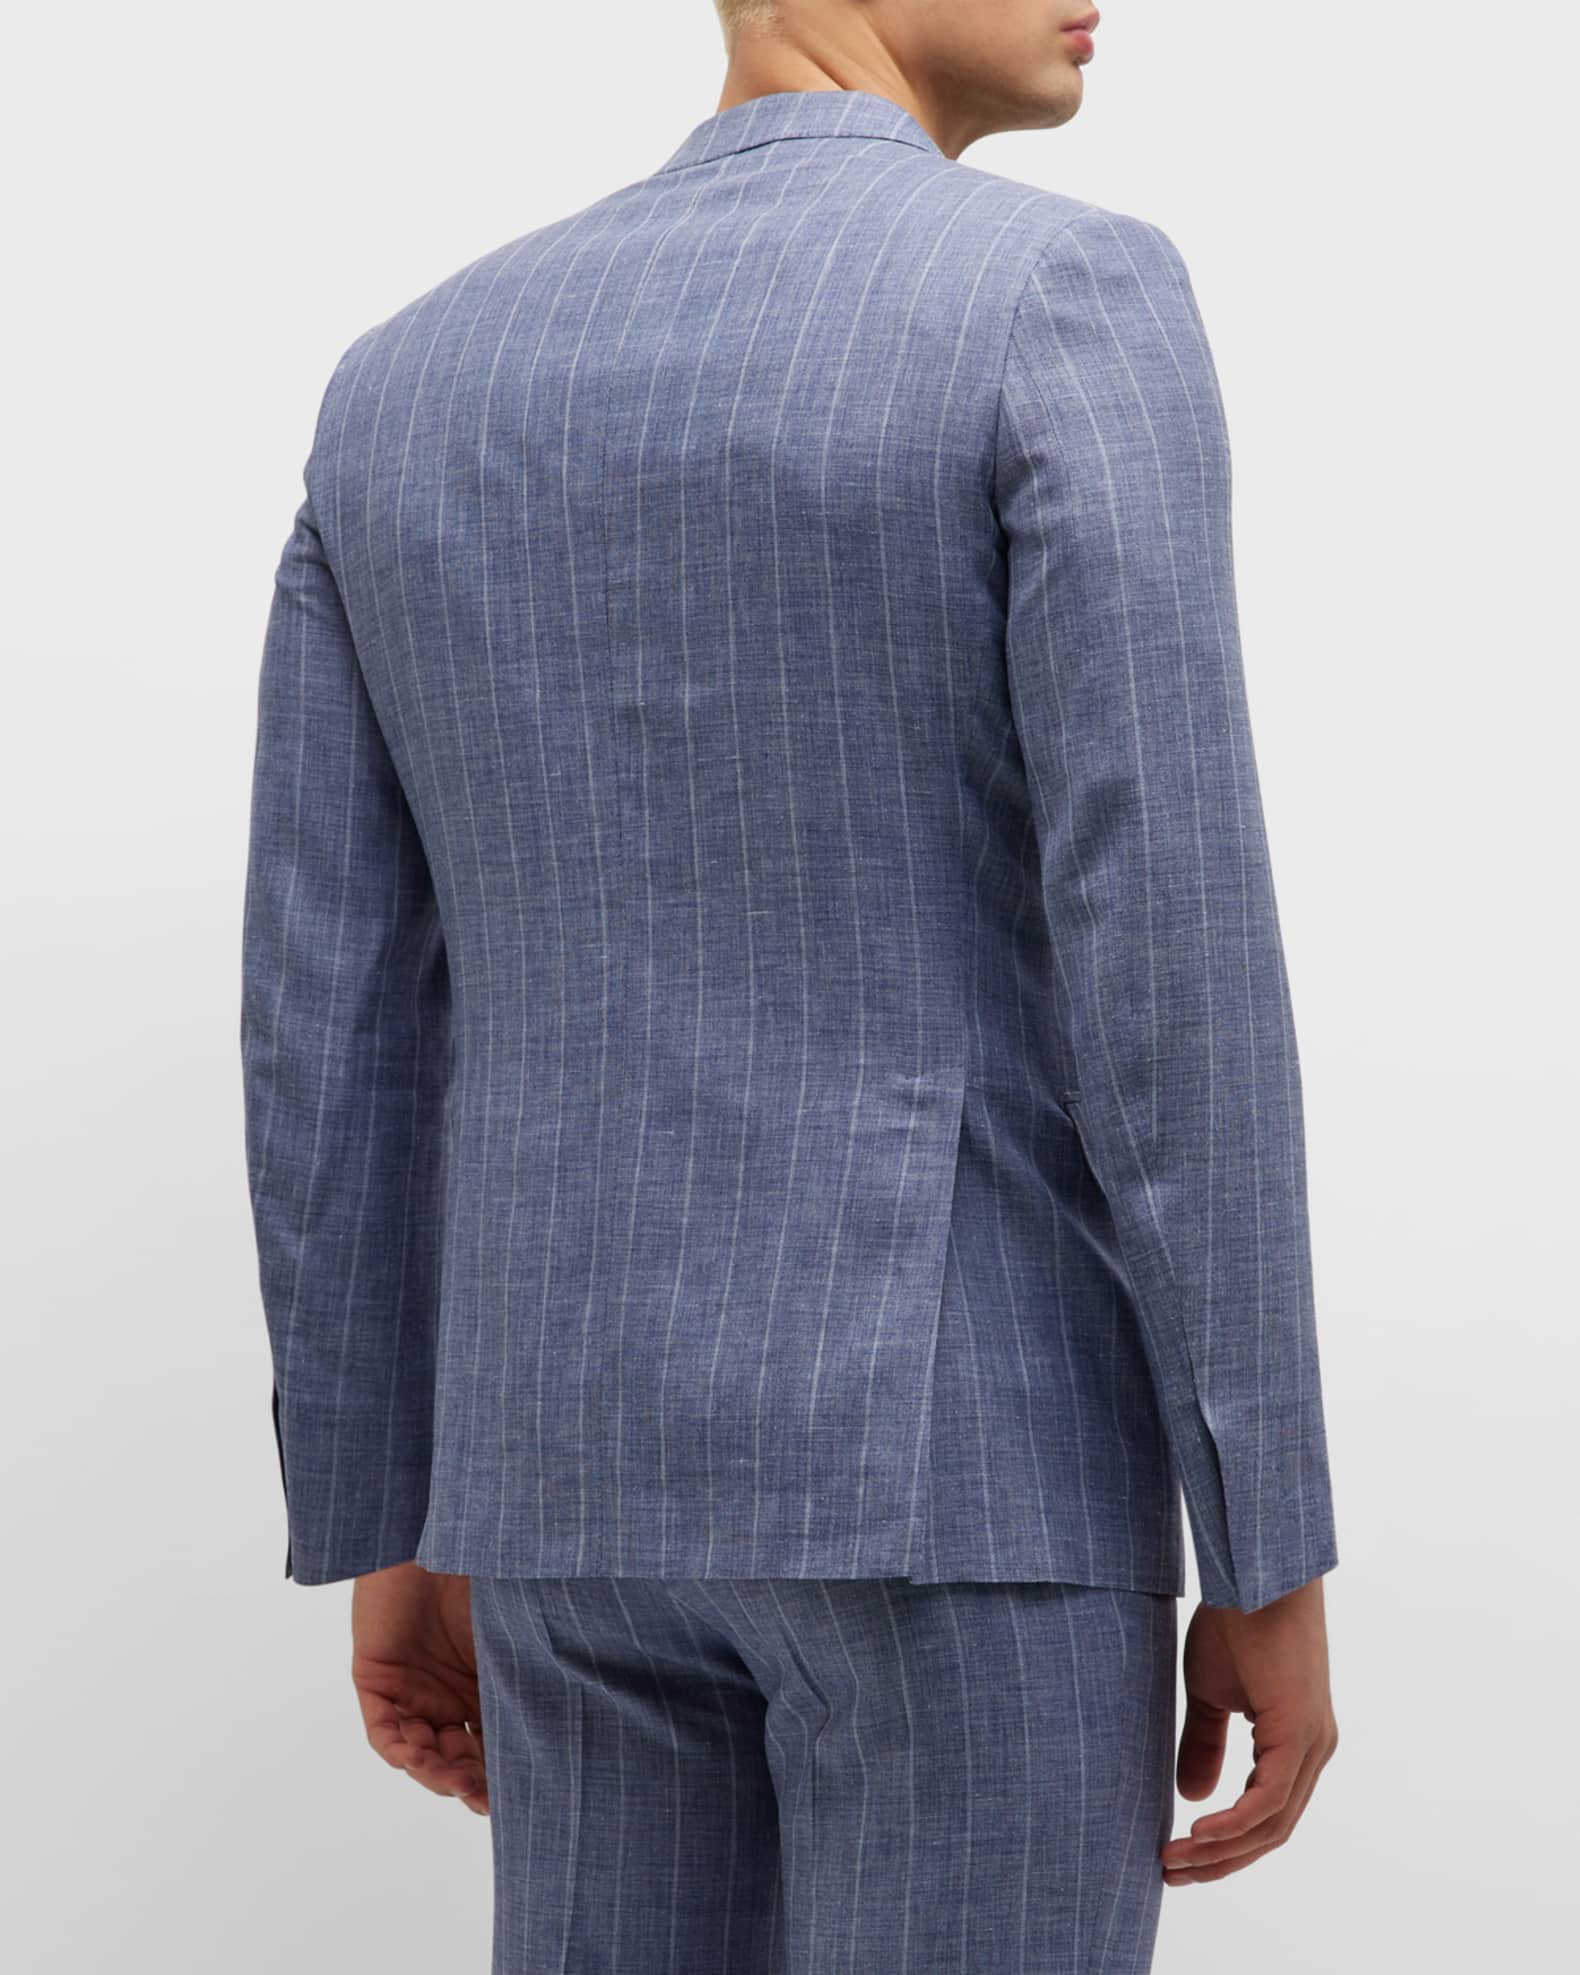 Brioni Men's Chalk Stripe Wool Suit | Neiman Marcus